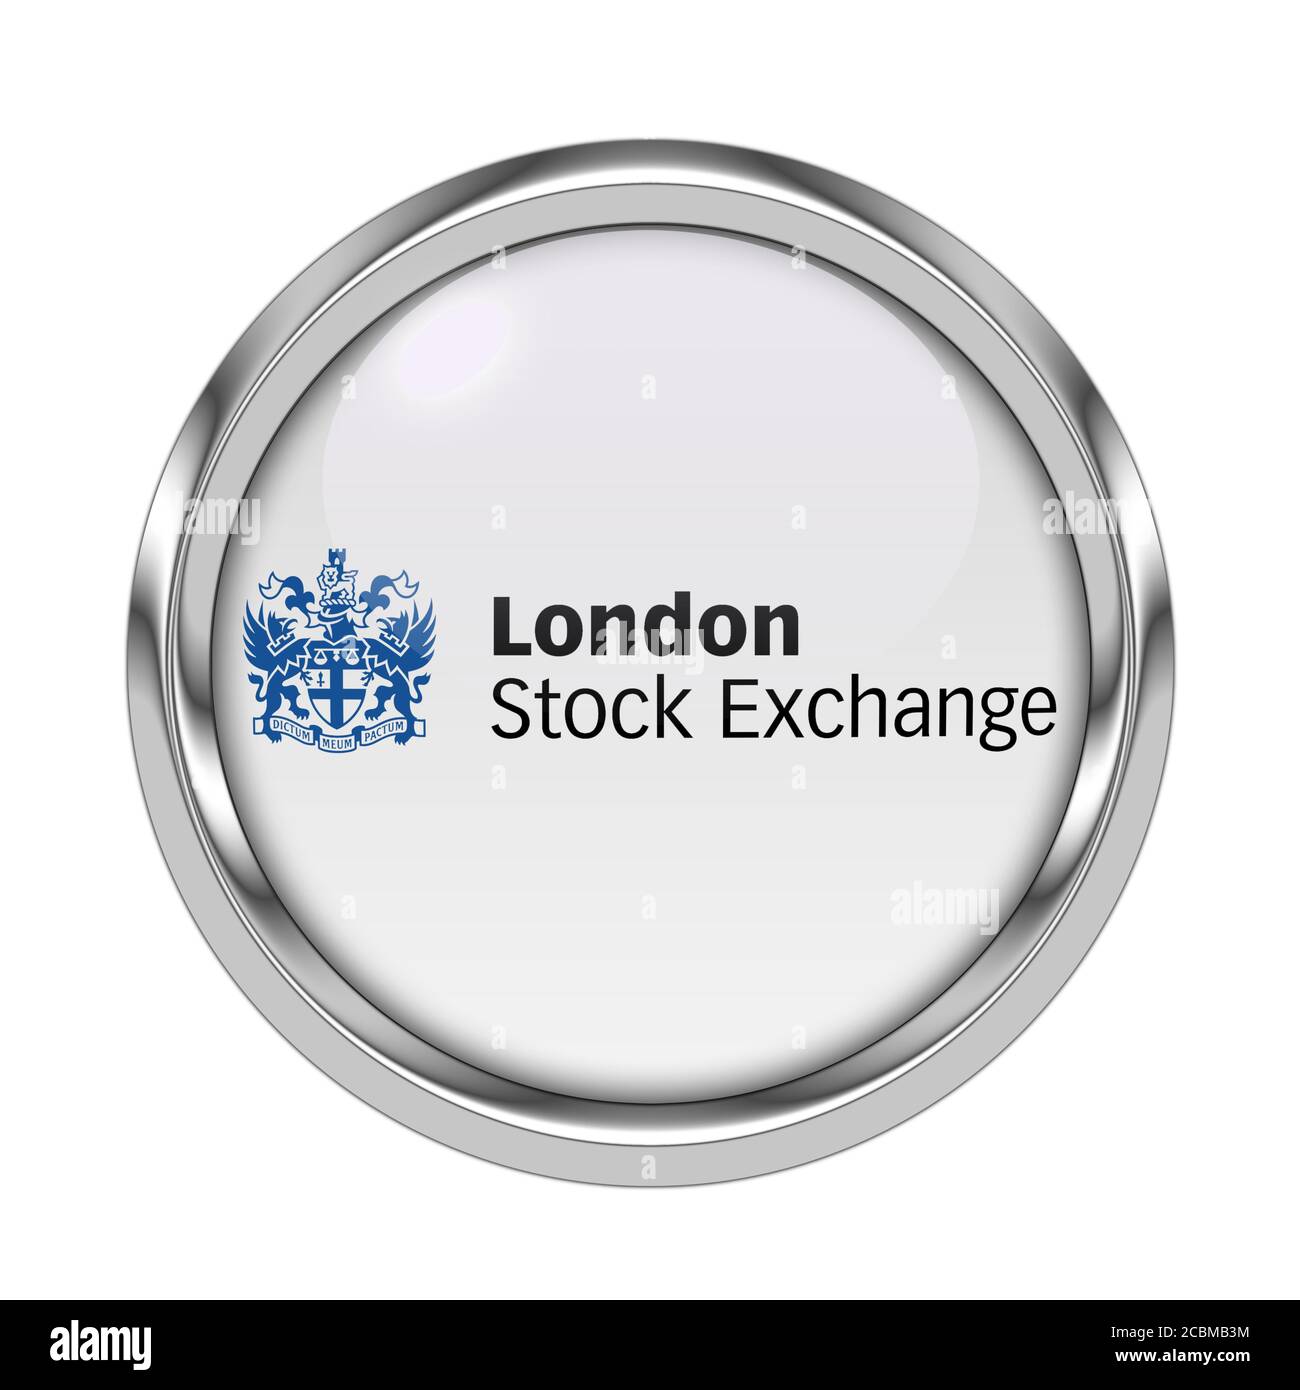 London Stock Exchange Stock Photo